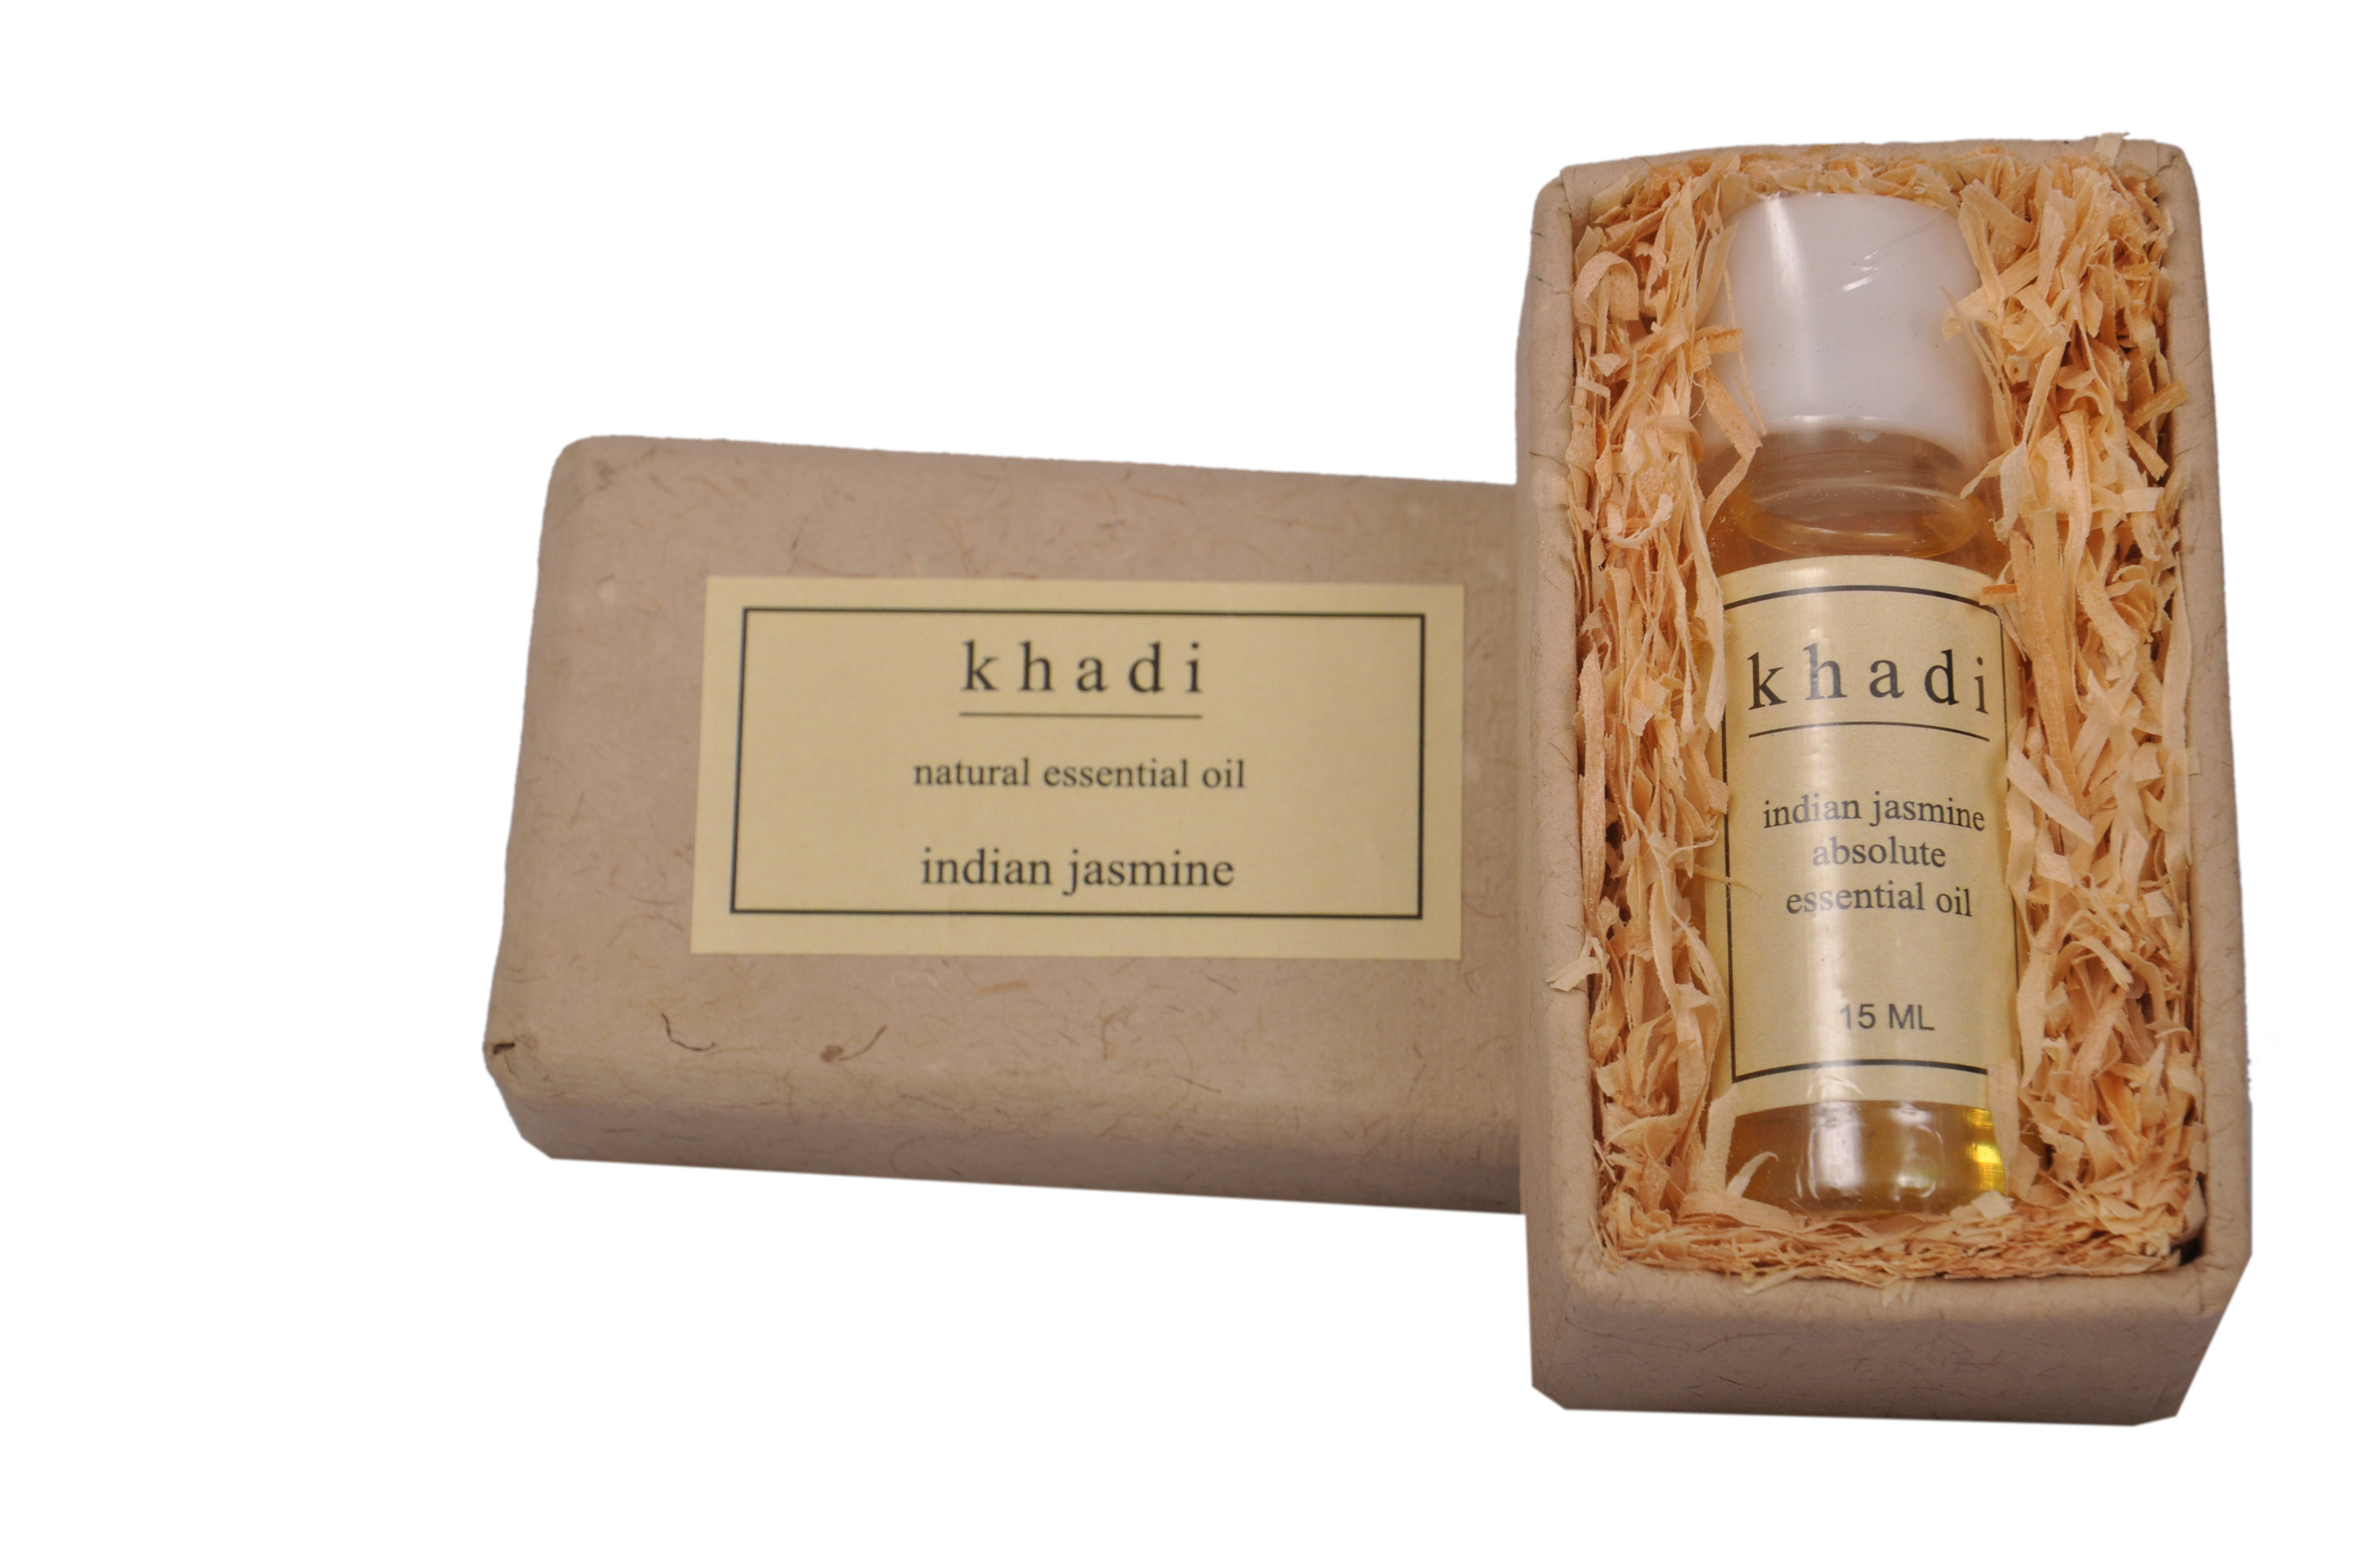 Buy Khadi Essential Oil - Indian Jasmine at Best Price Online